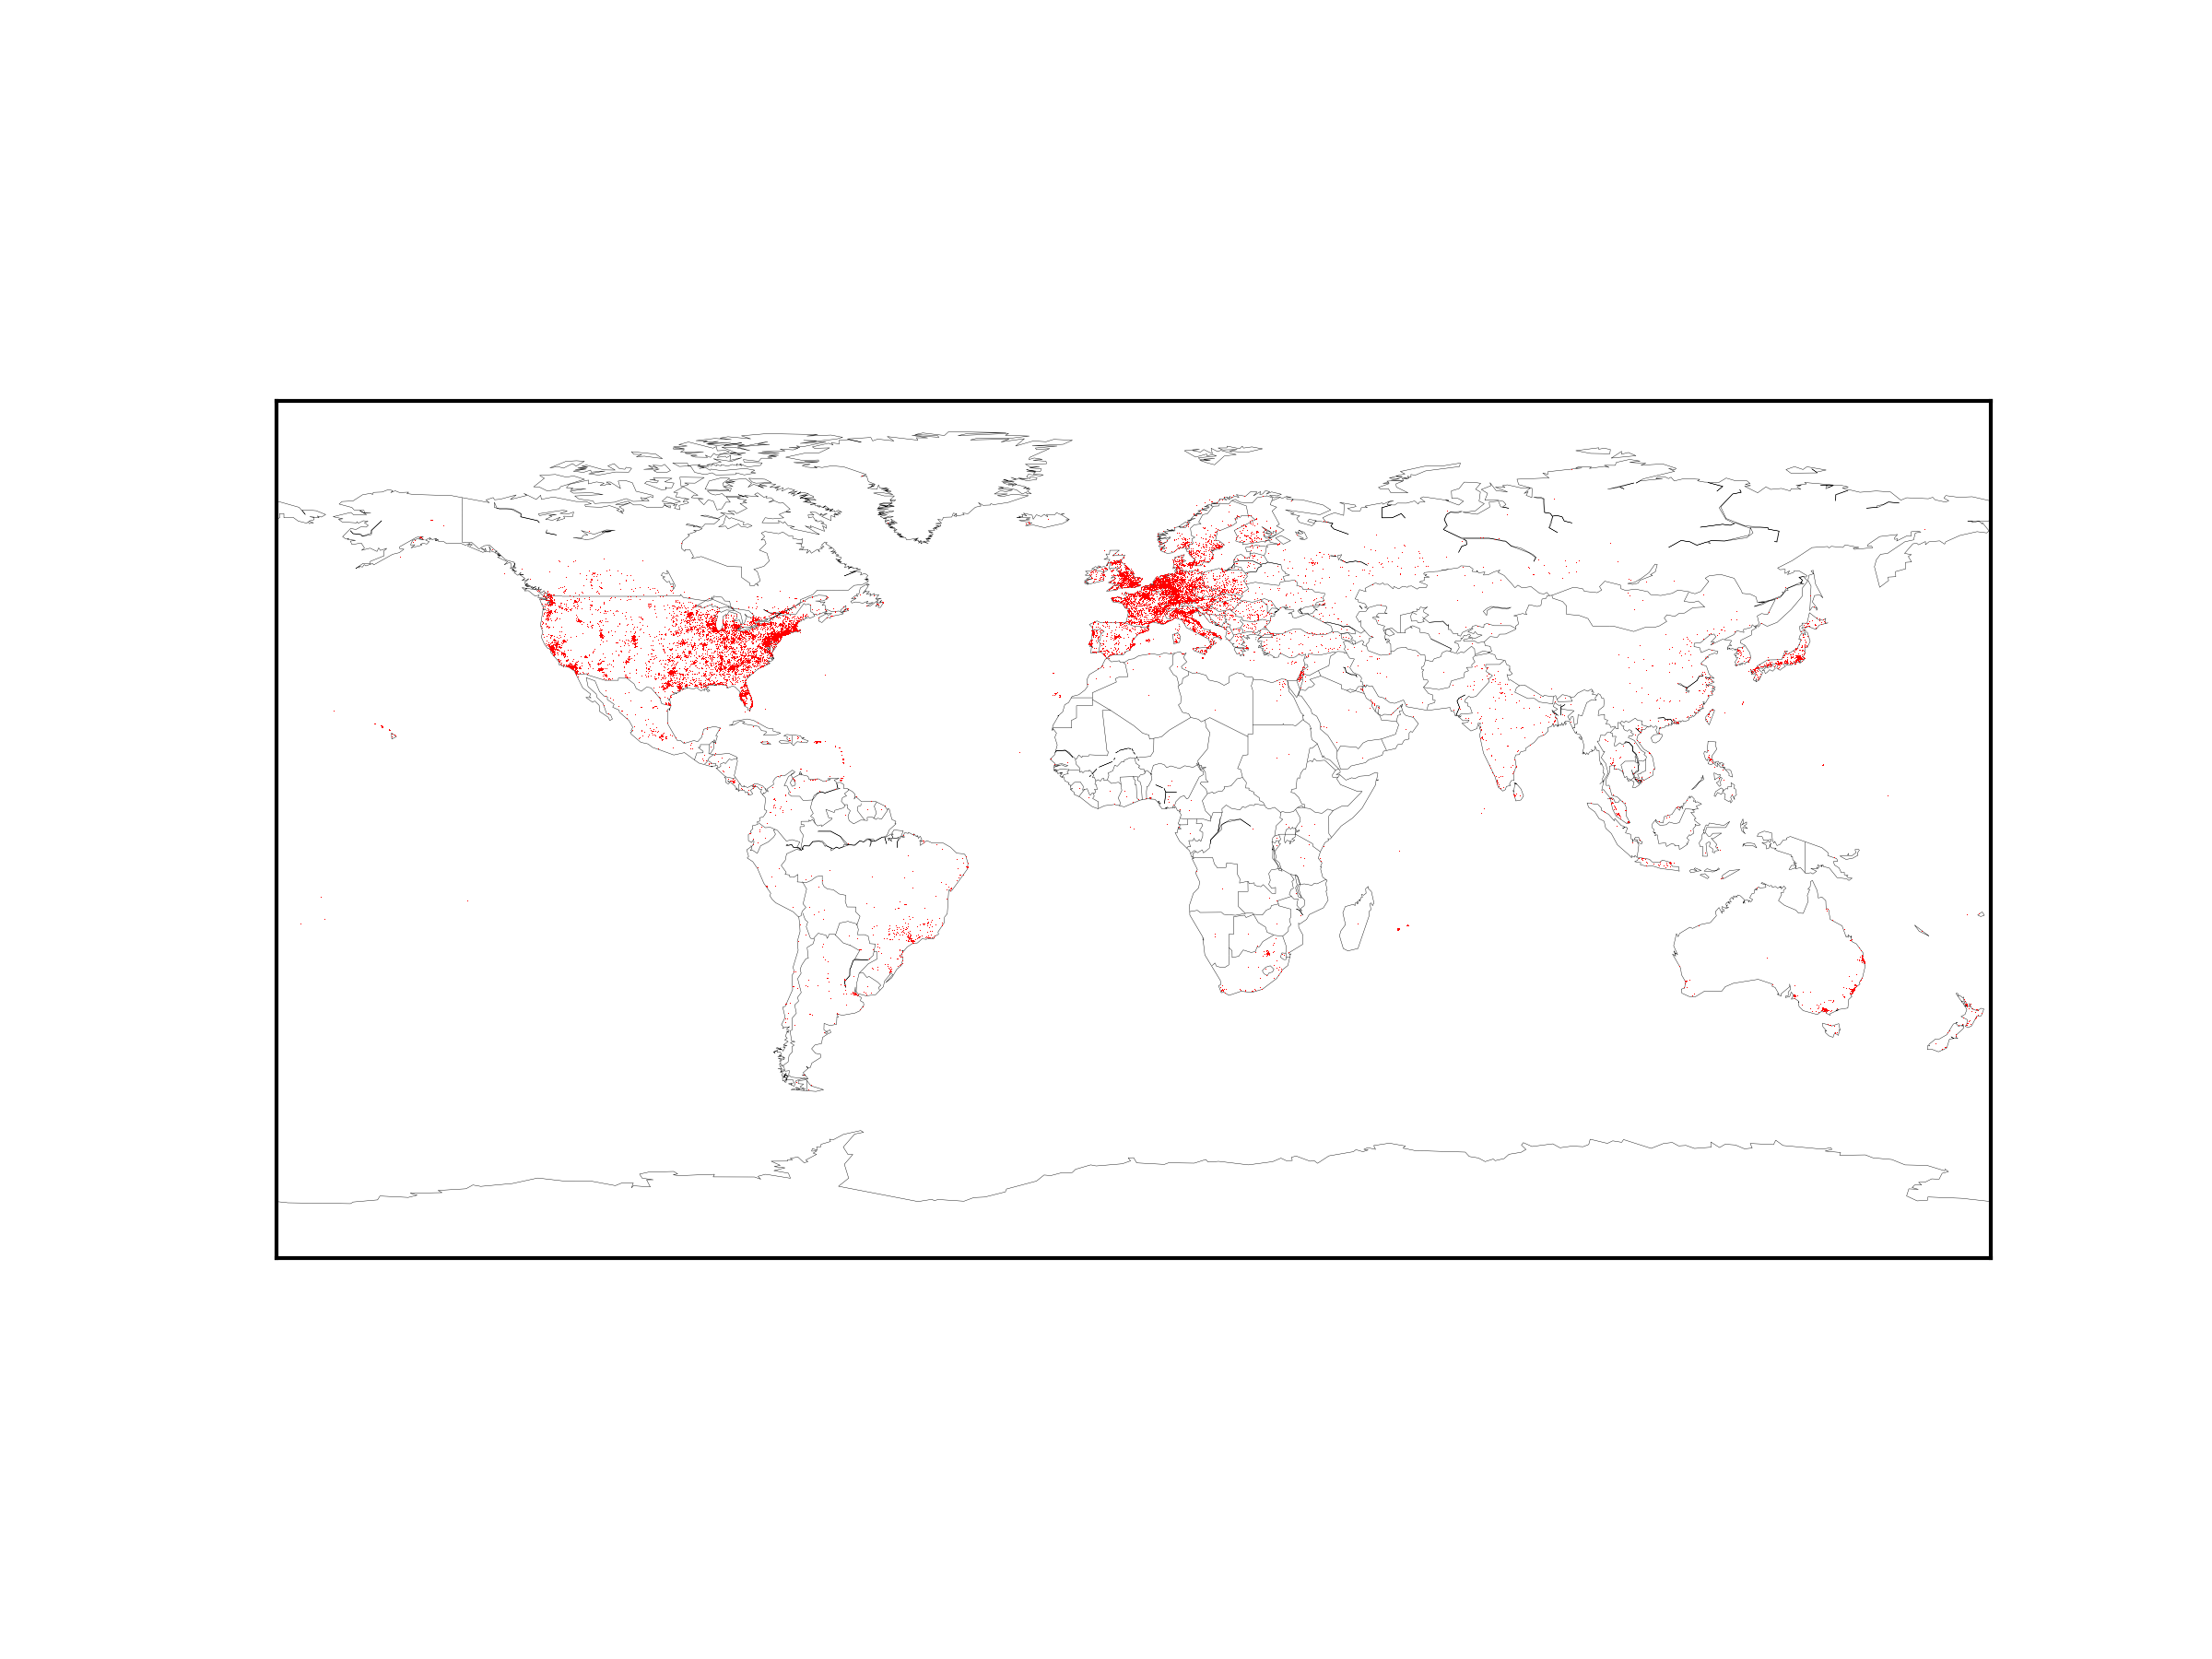 IP Adresses around the world